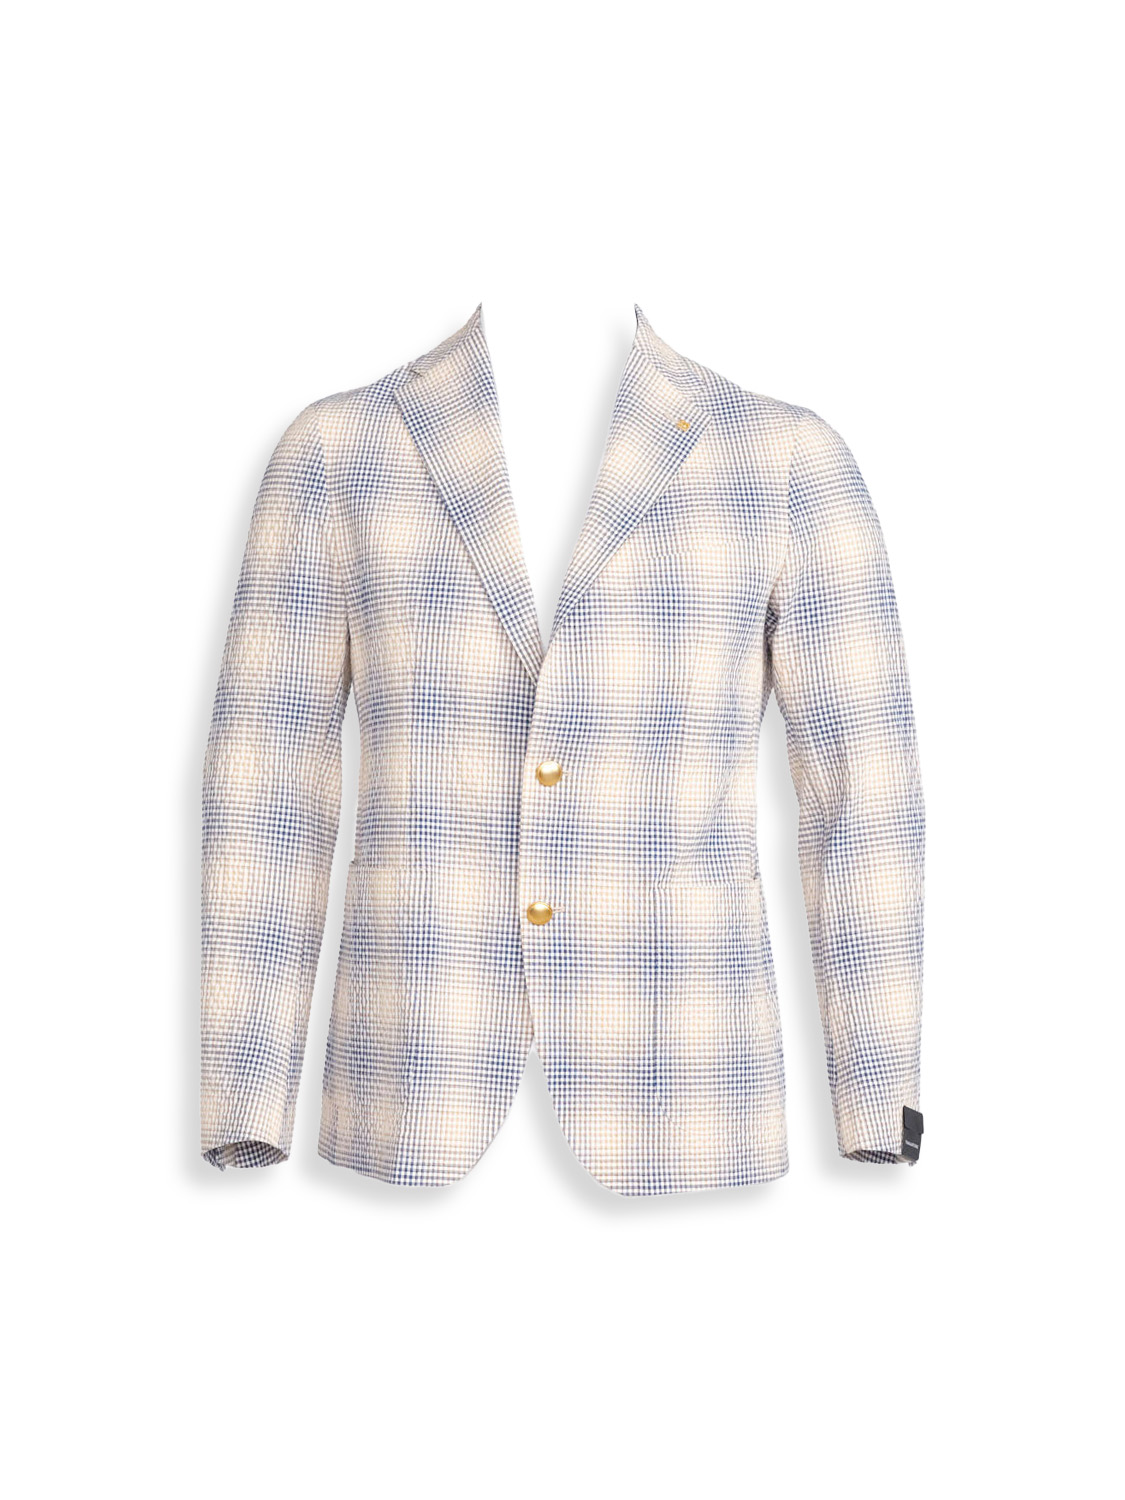 Cape Jacket - Loose fit jacket with deep set sleeves